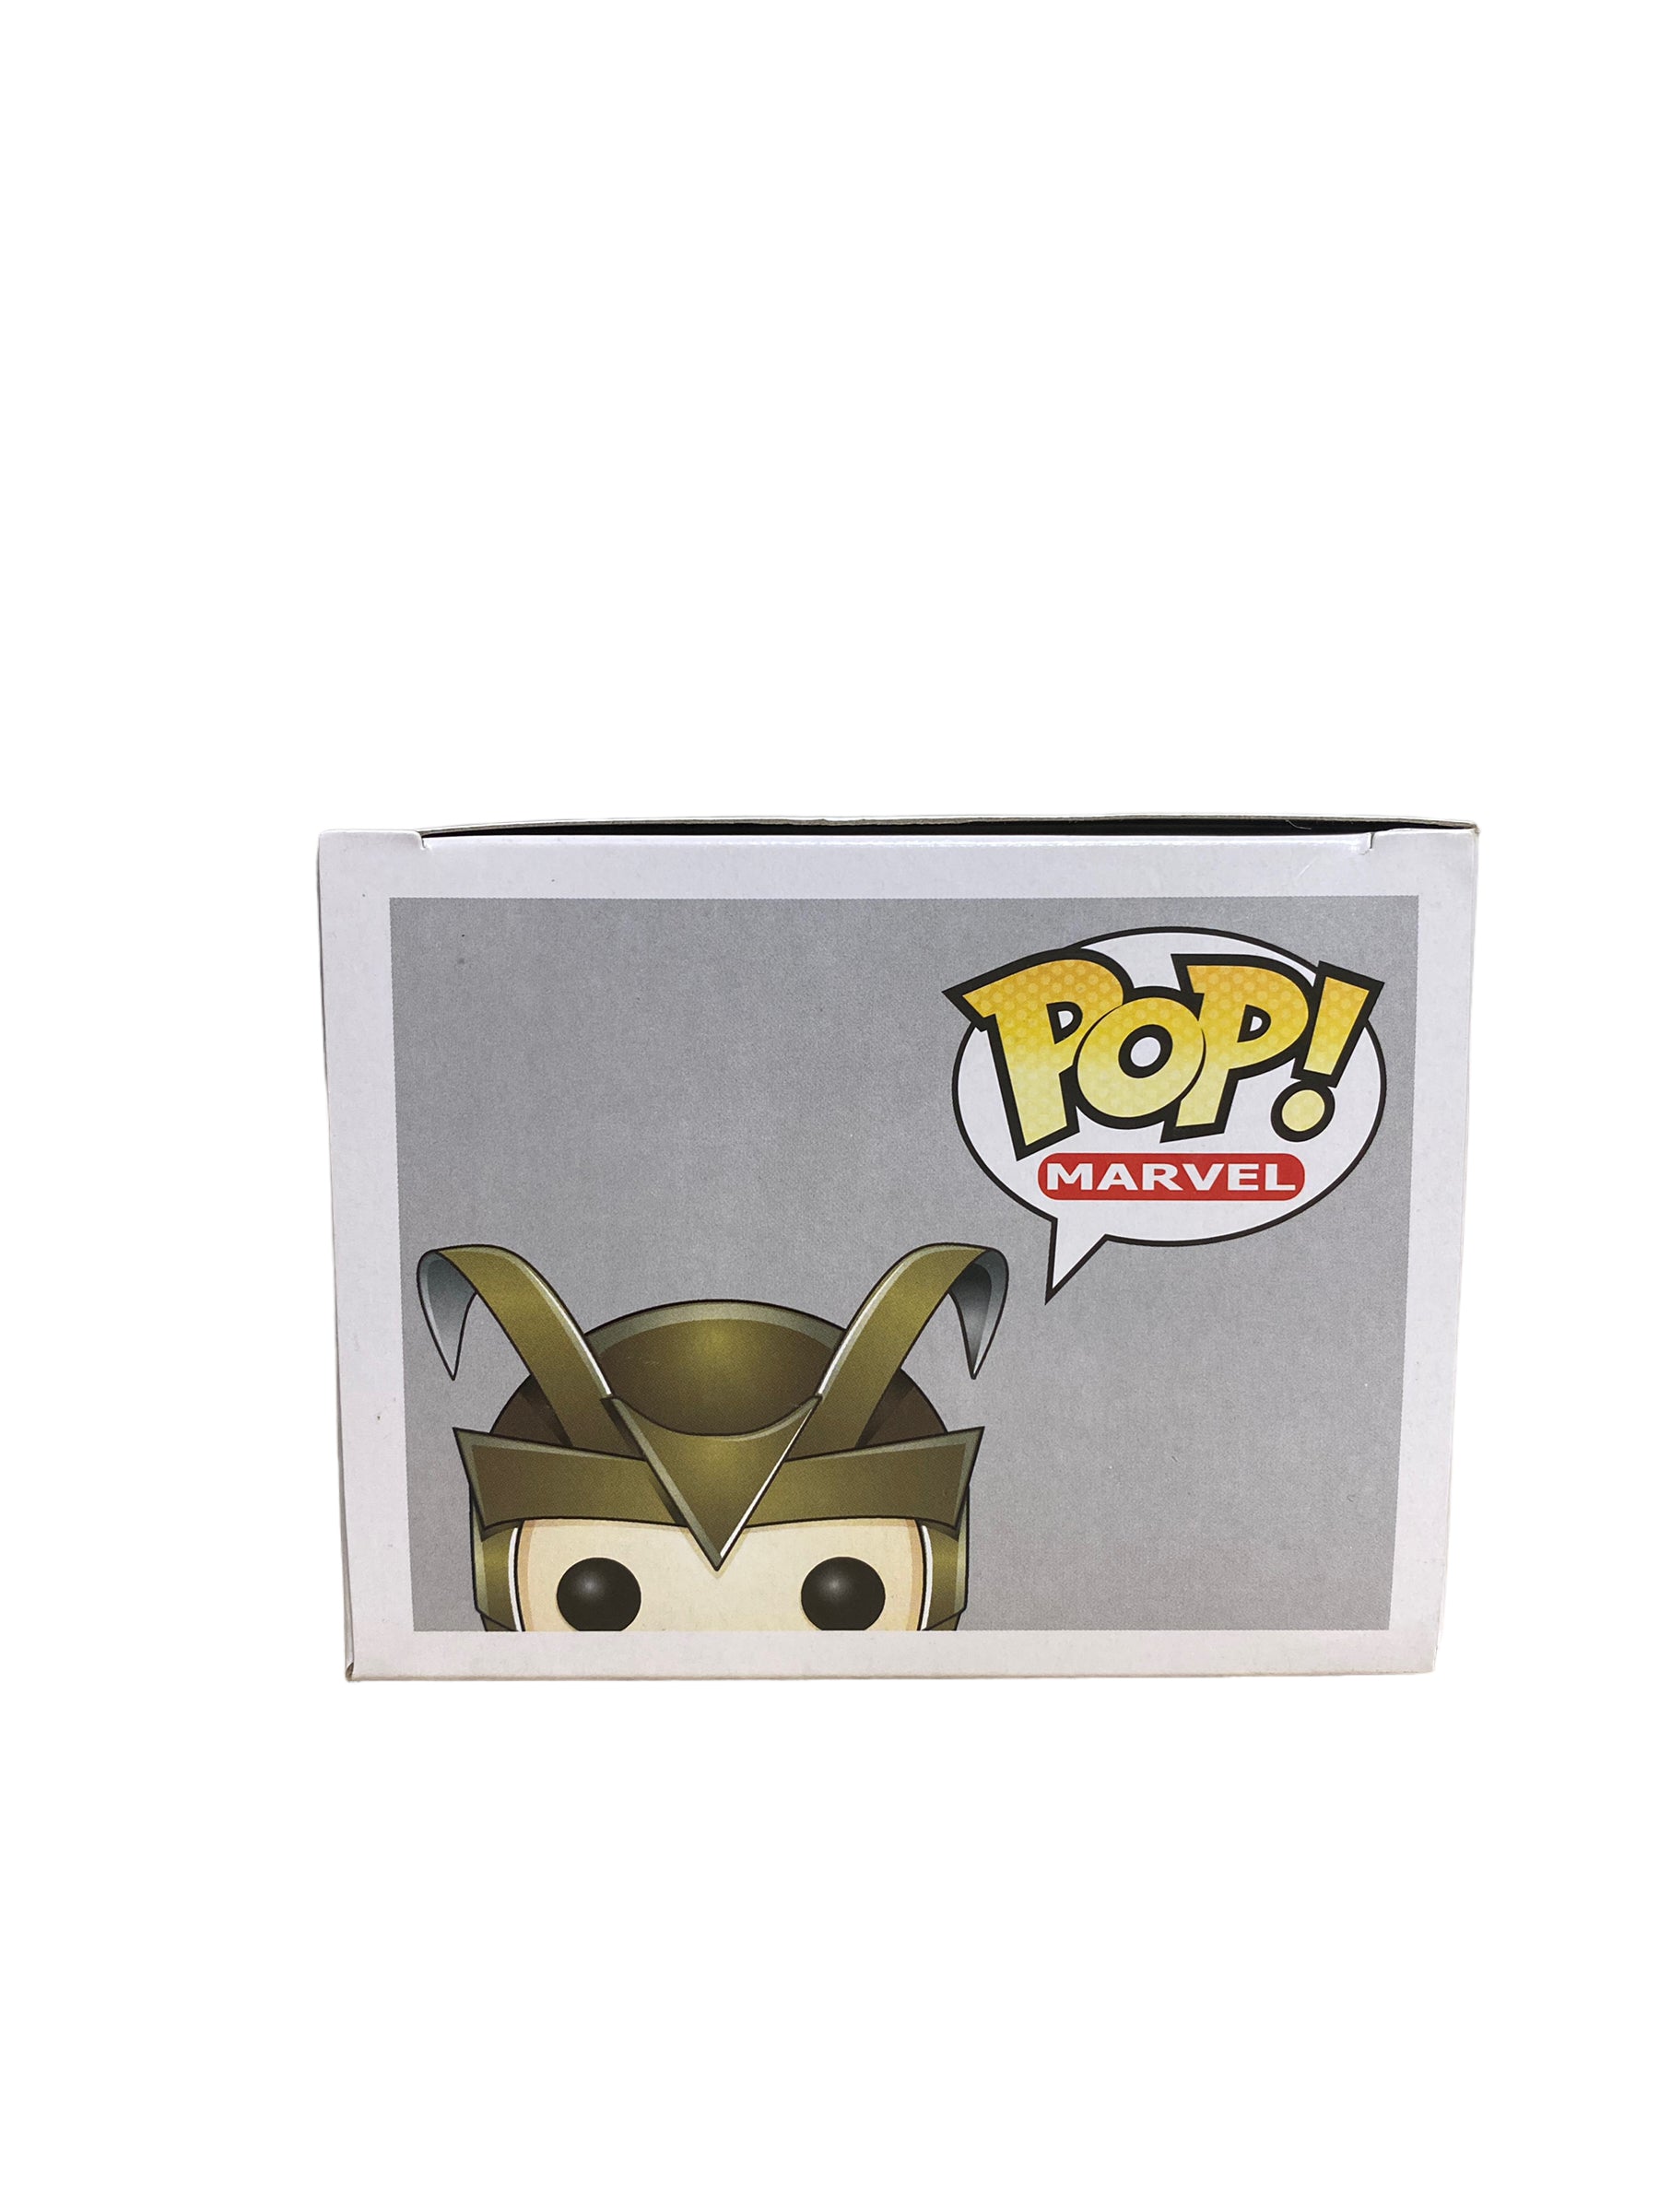 Loki #02 Funko Pop! - Thor the Mighty Avenger - 2016 Pop! - PopLife Exclusive - Condition 8.5/10